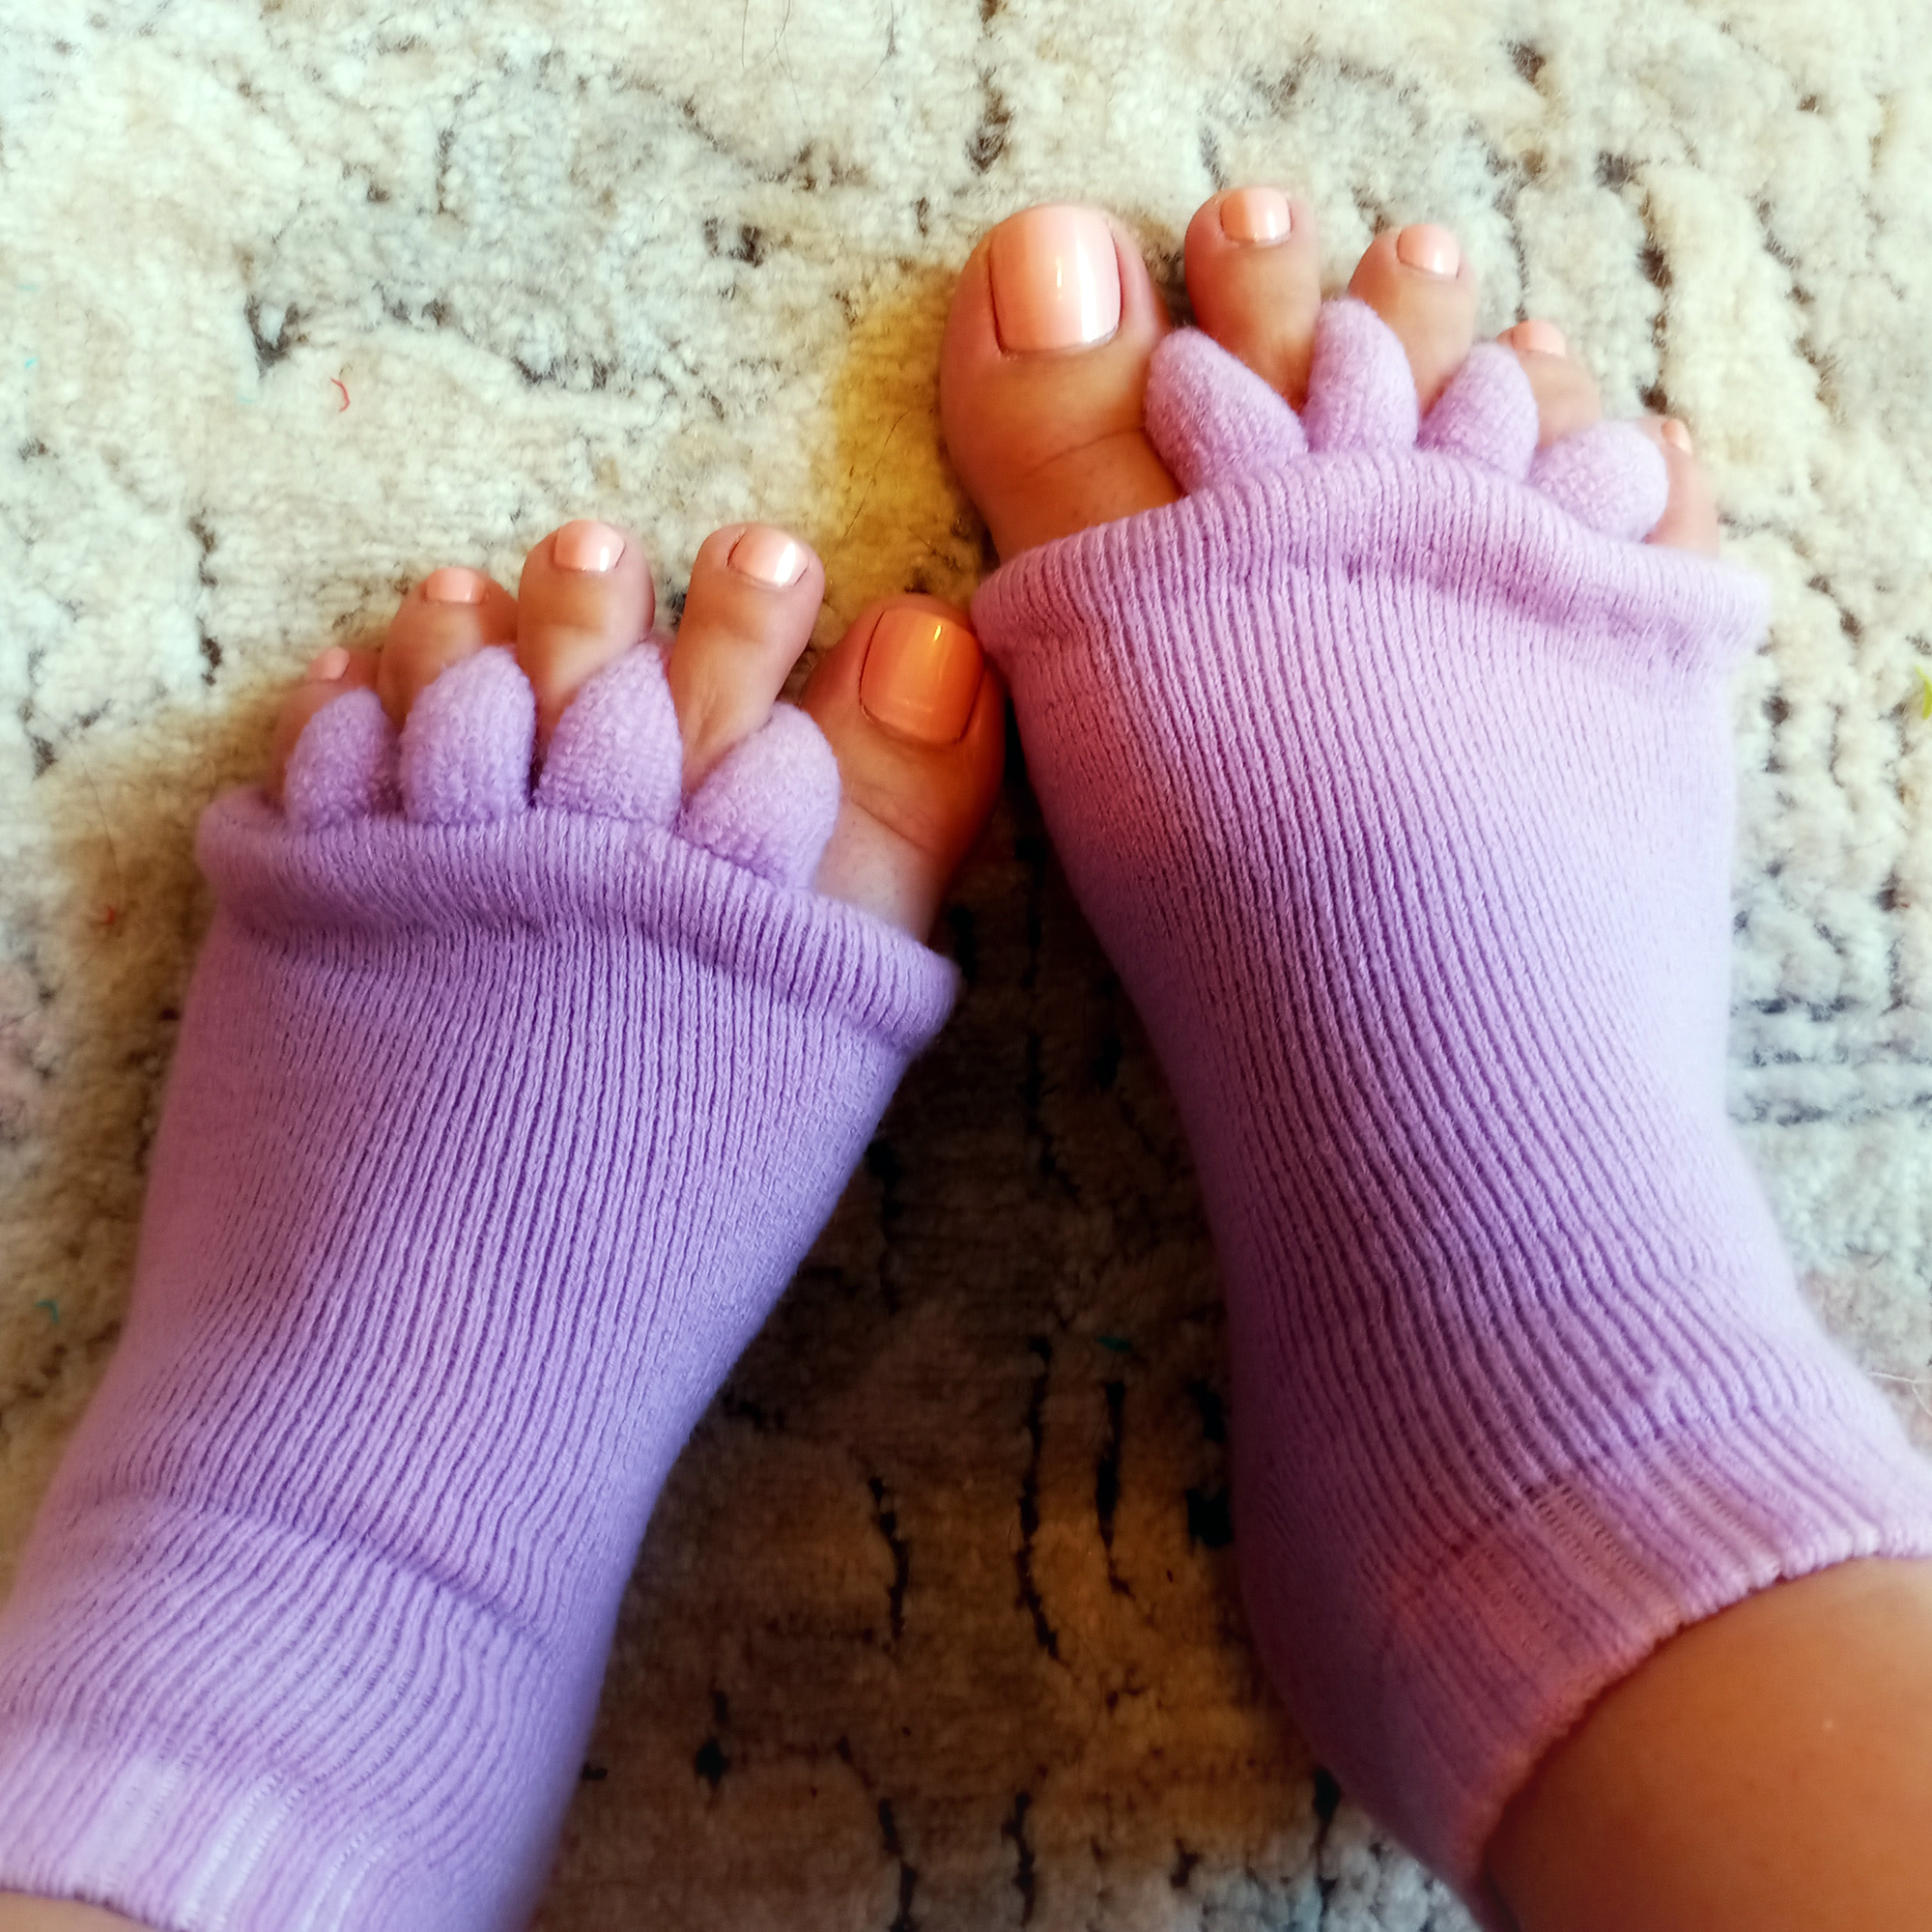 BESTONZON PIXNOR 5 Pairs of Men's Comfy Five Toes Separator Socks